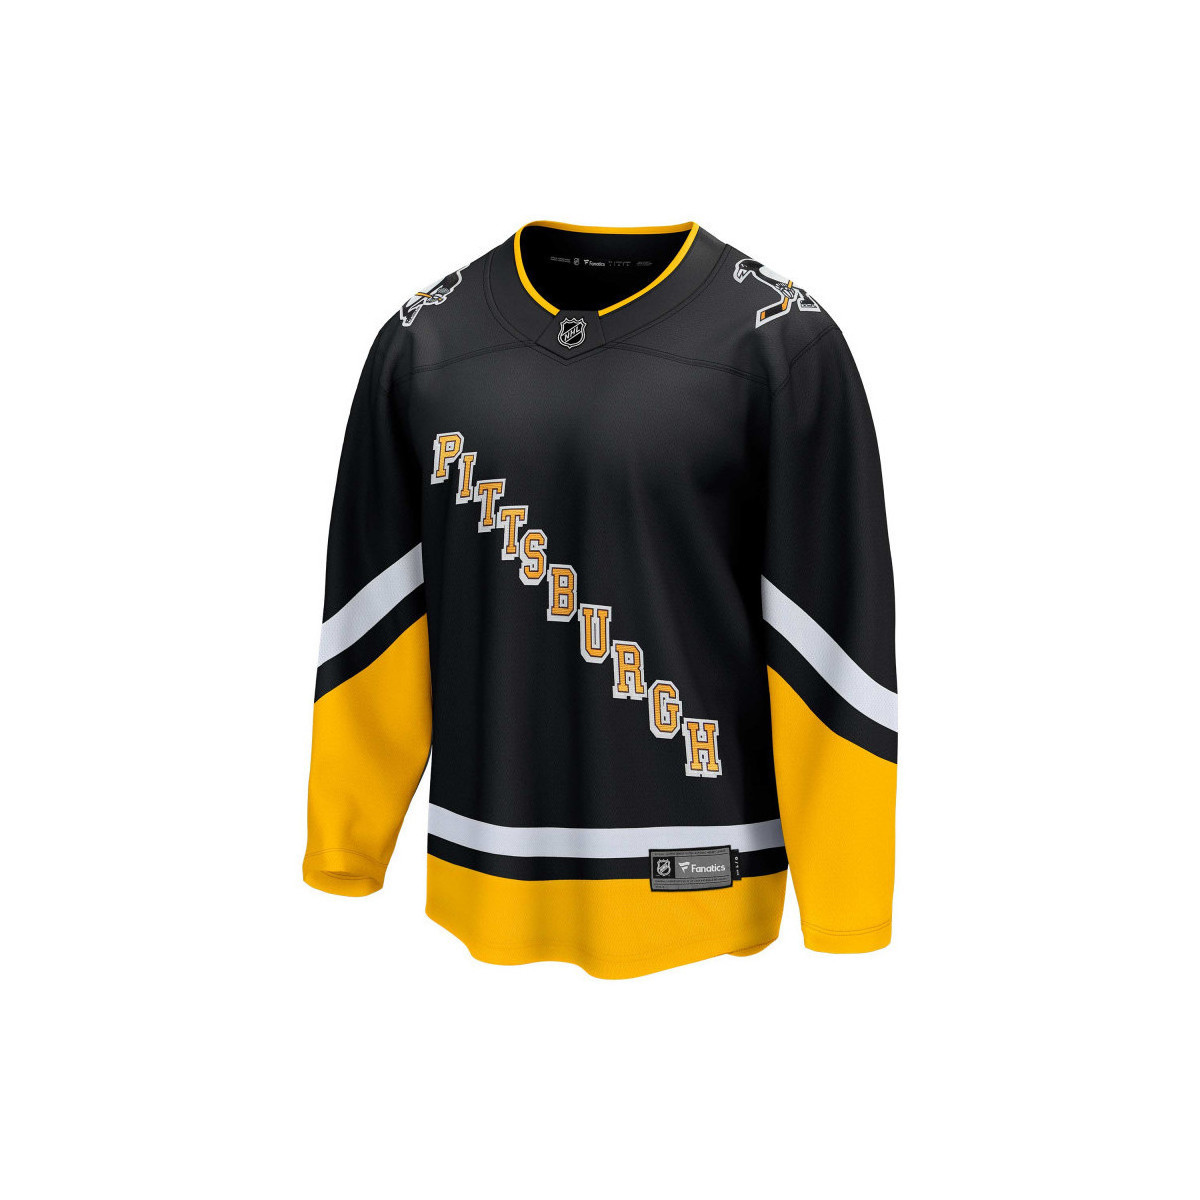 Vêtements T-shirts manches longues Fanatics Maillot NHL Pittsburgh Penguin Multicolore